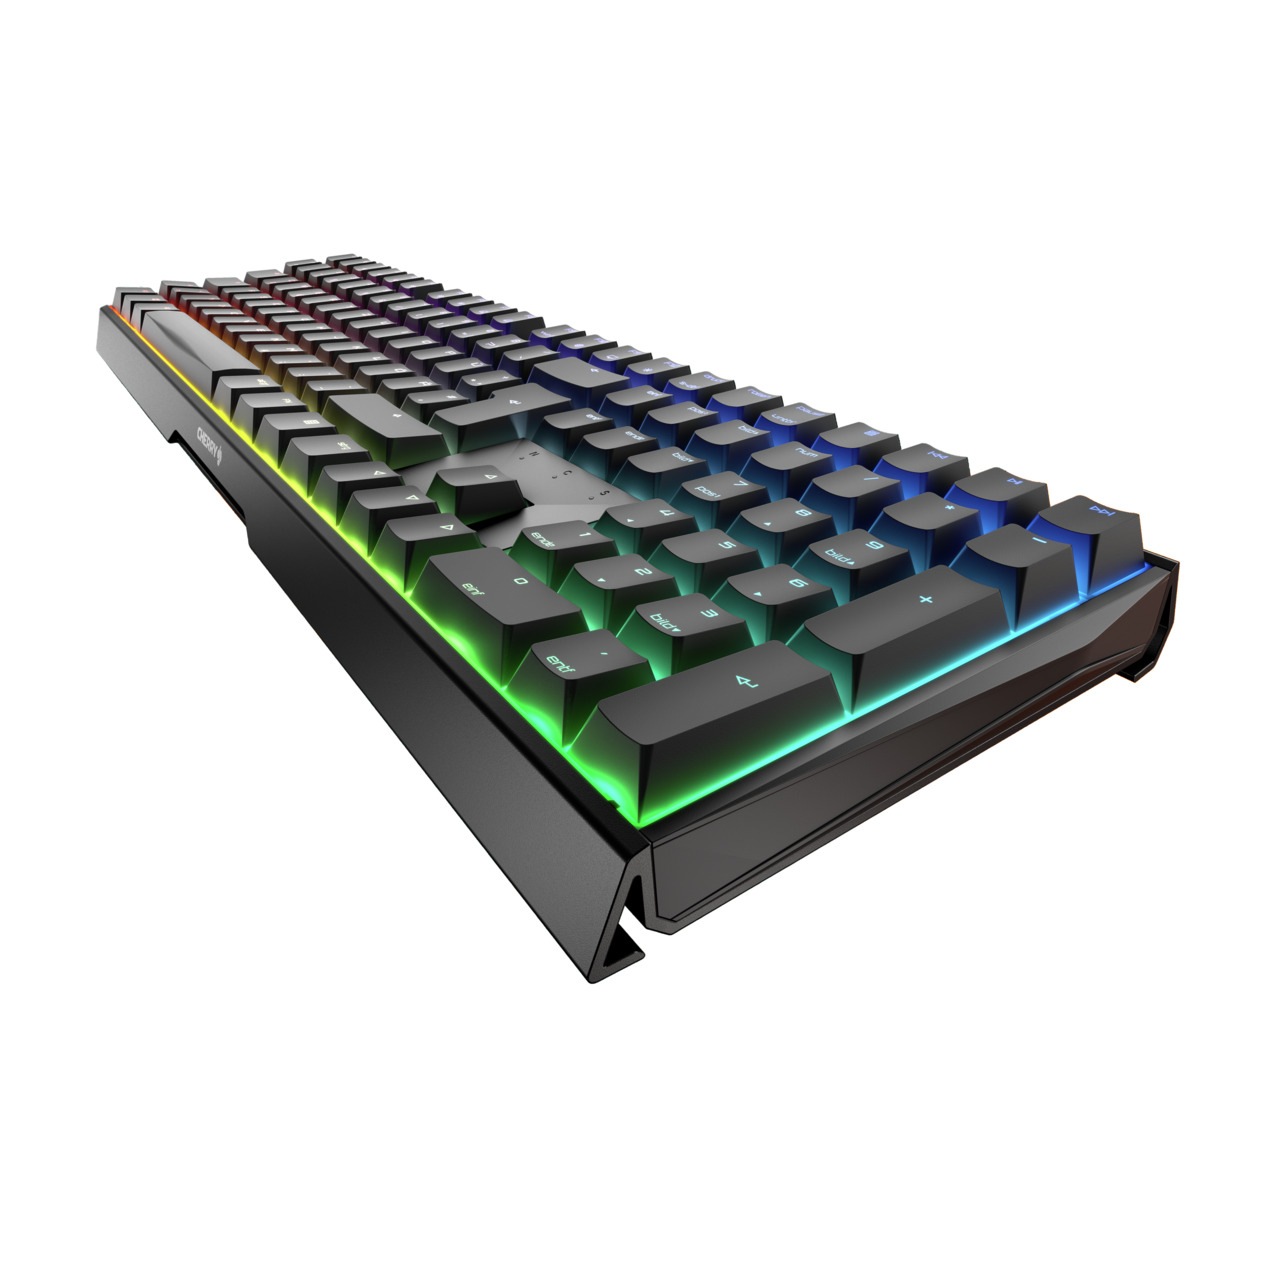 Cherry Gaming-Tastatur »MX BOARD 3.0 S«, MX Brown